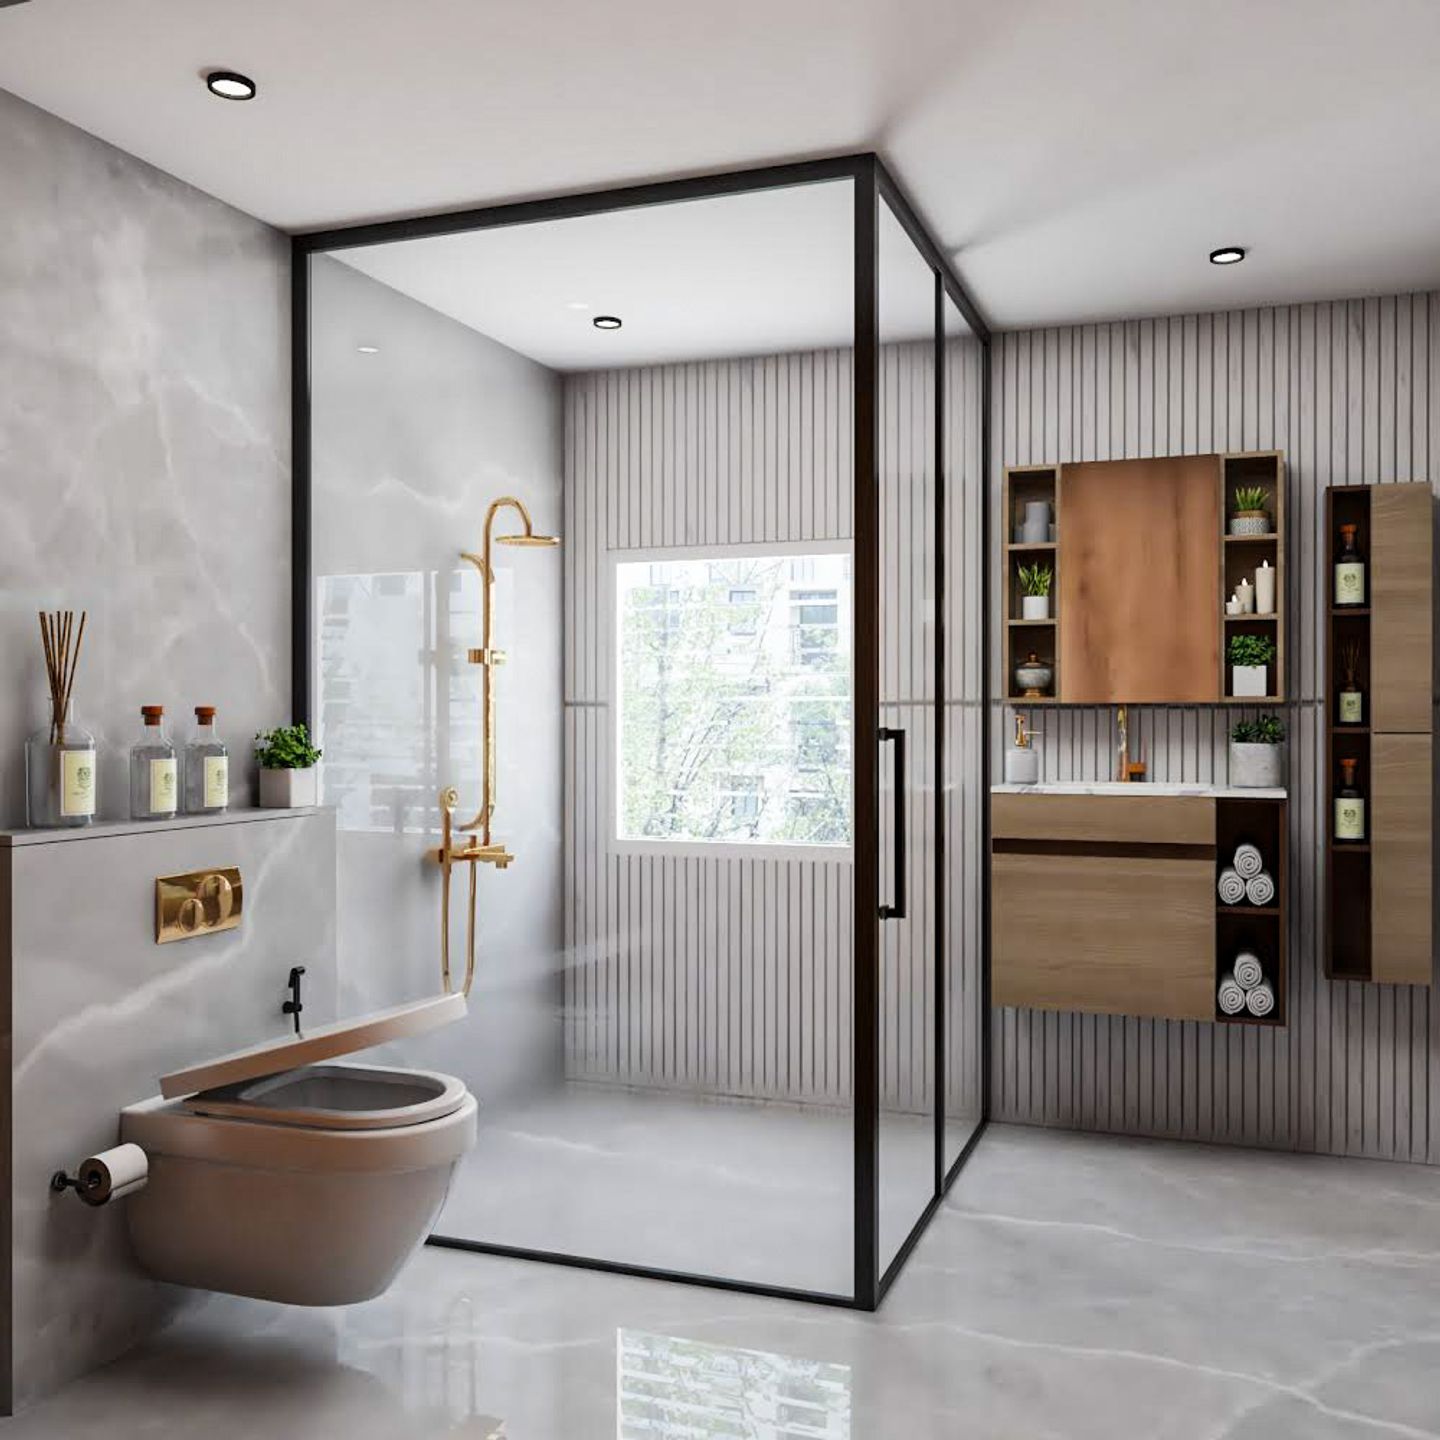 Bathroom Design With A Shower Unit - Livspace